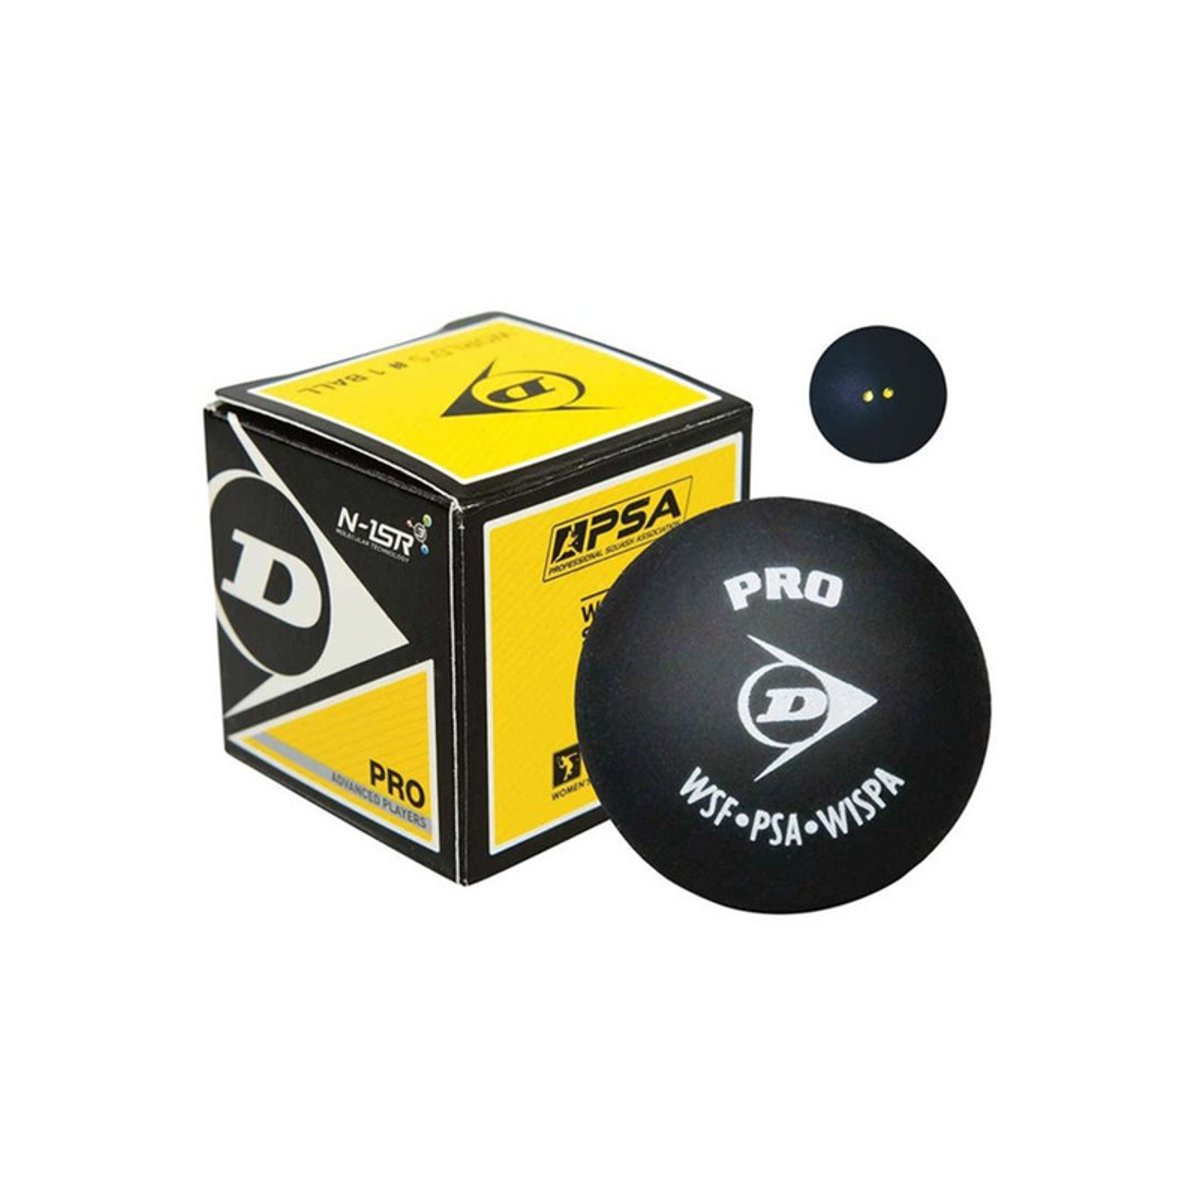 Pro 1bbx/S203-206 Squash Ball